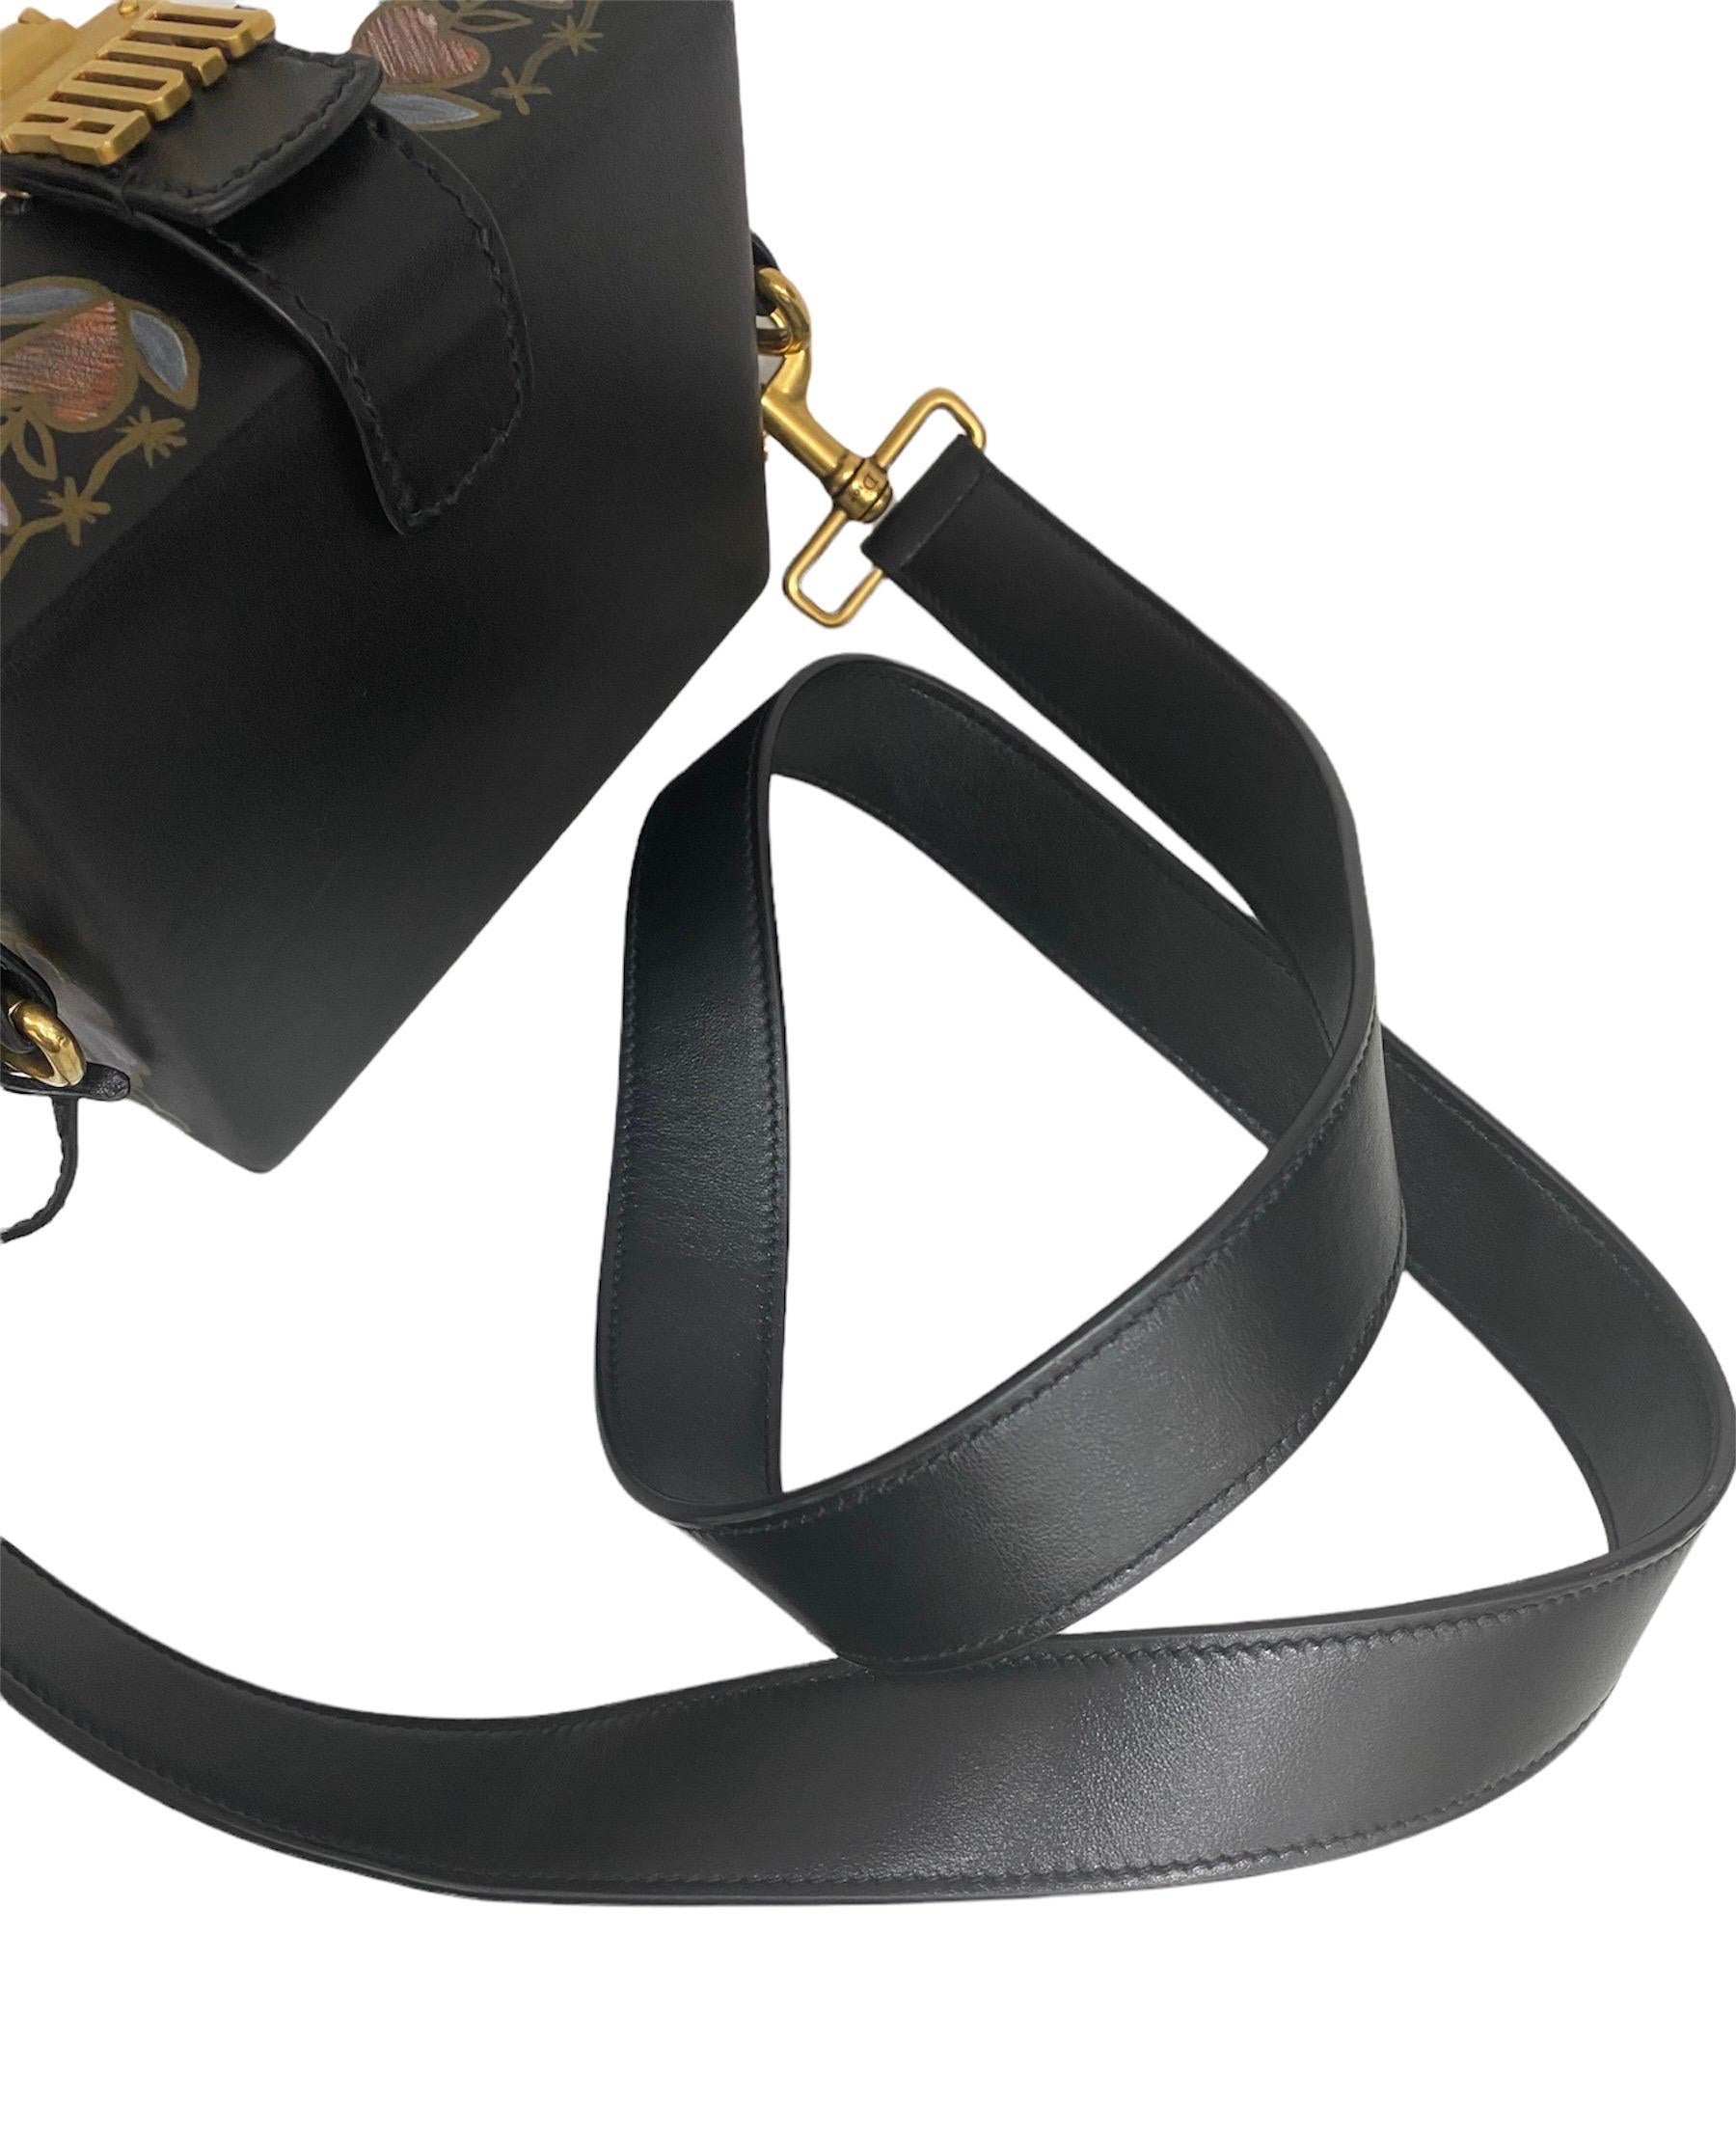 2017 Dior LockBox Zodiac Limited Edition Shoulder Bag In Excellent Condition For Sale In Torre Del Greco, IT